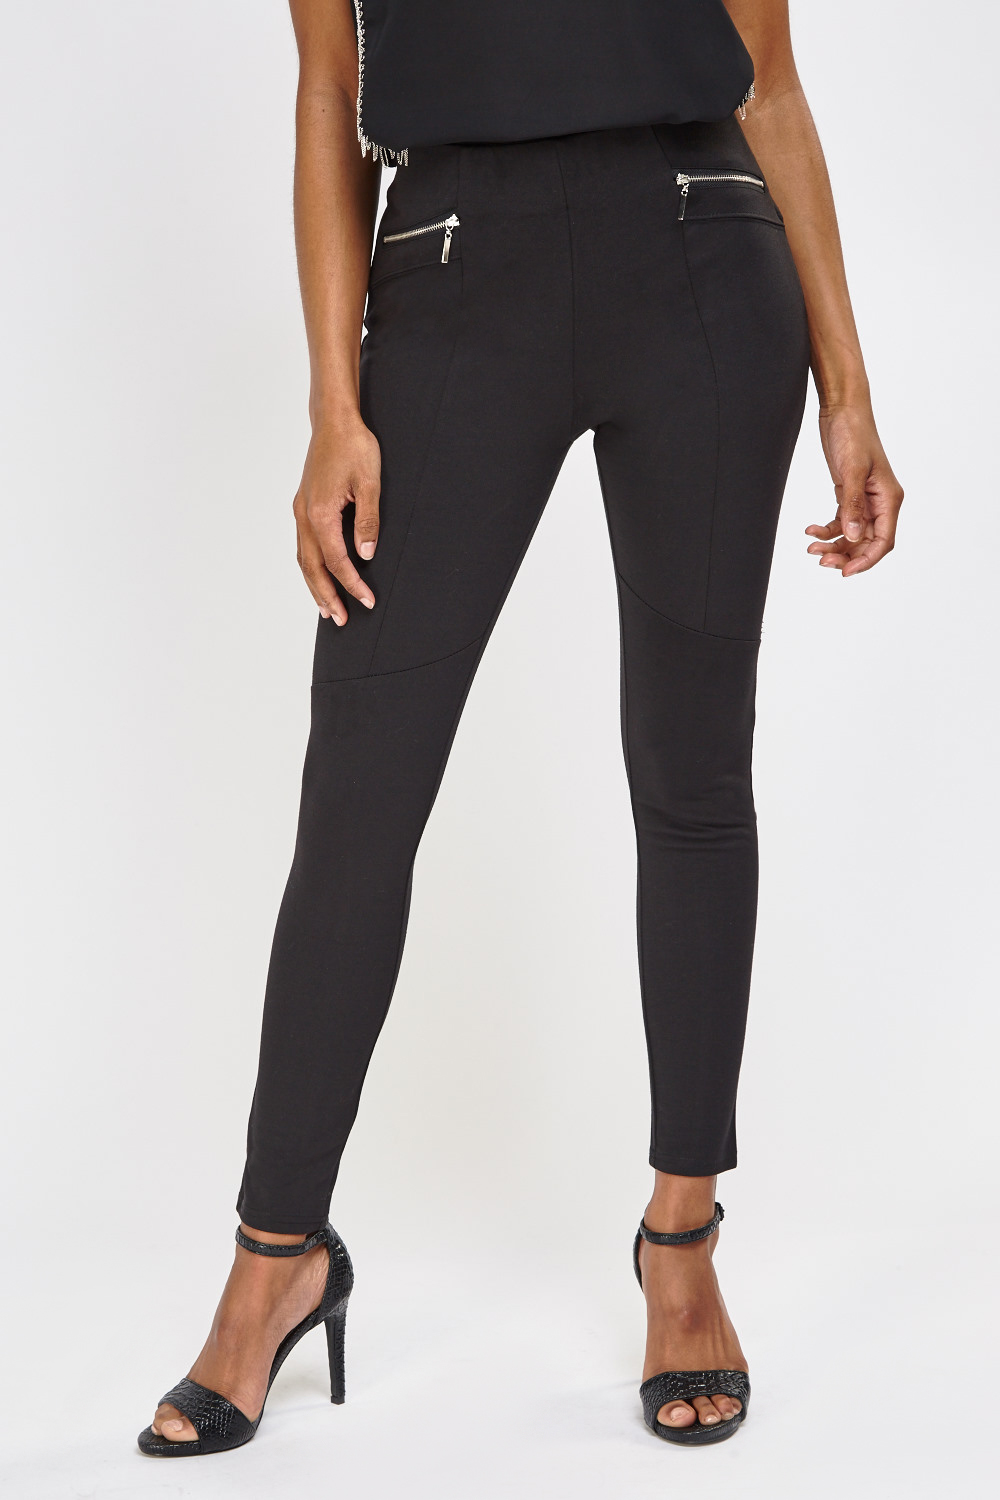 Zip Detailed Black Trousers - Just $7